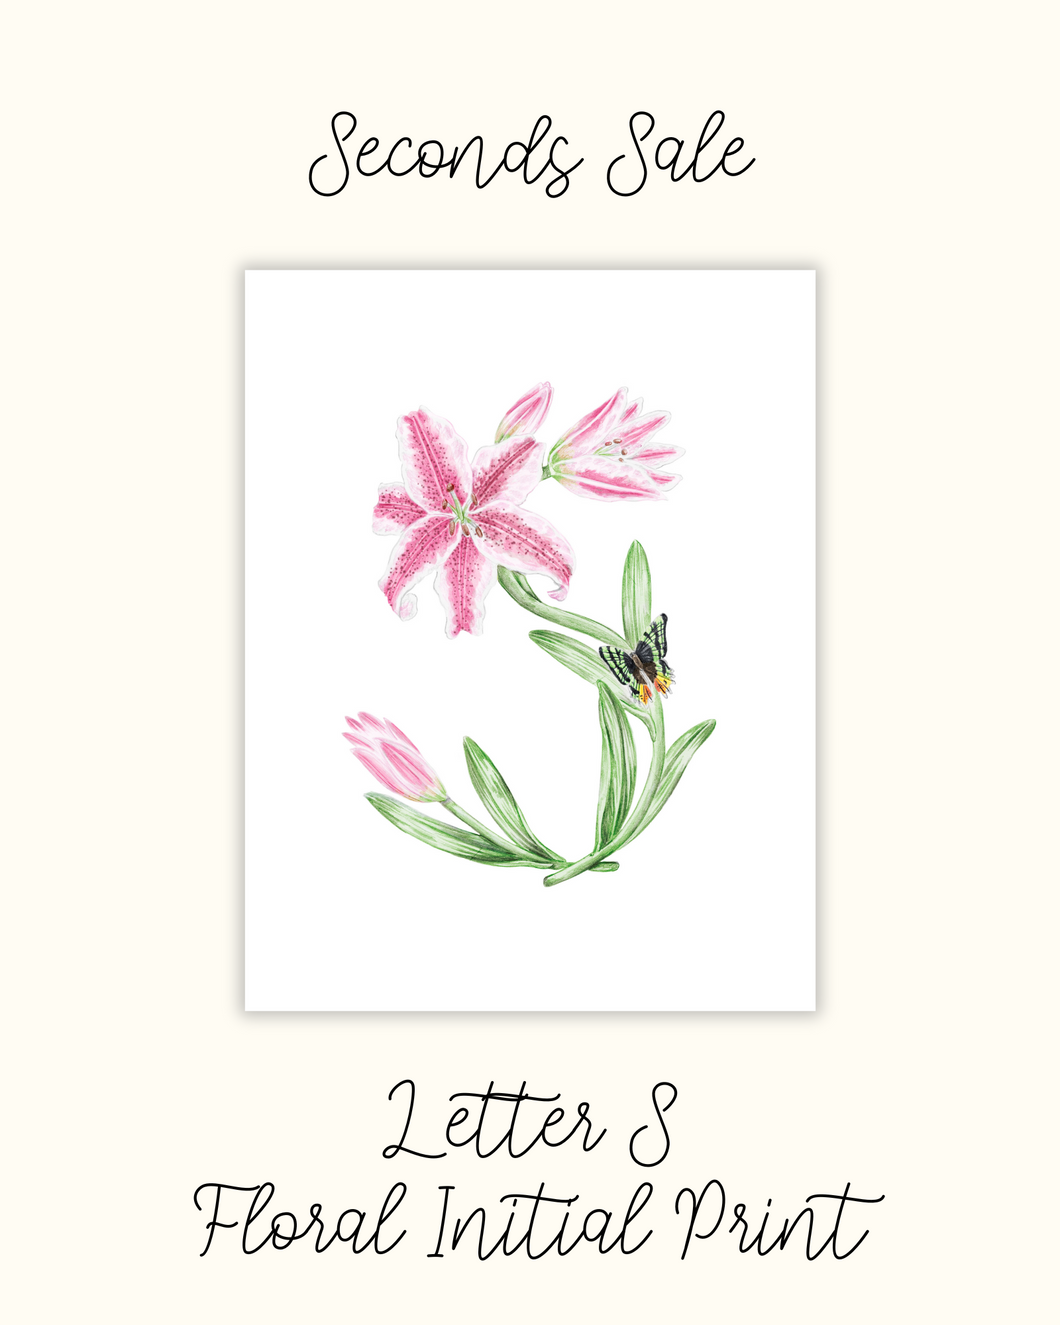 Letter S  Floral Initial Print - Seconds Sale